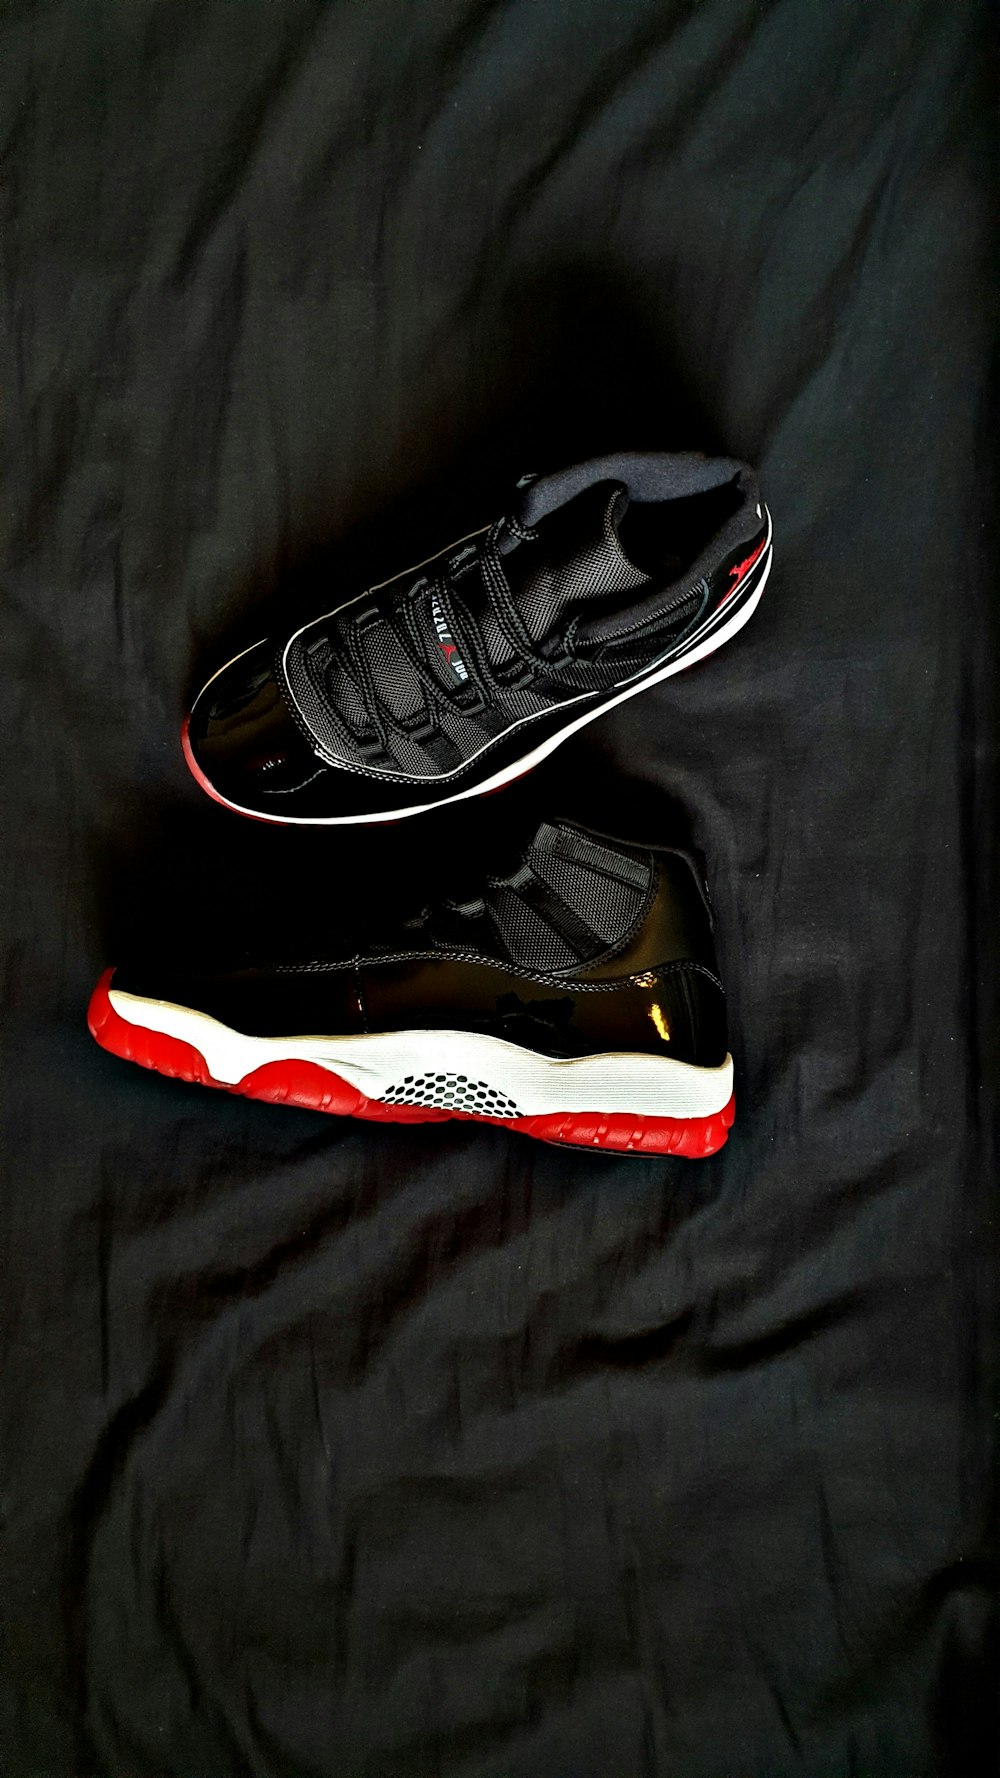 Pair of black Air Jordan 11's photo – Free Shoe Image on Unsplash